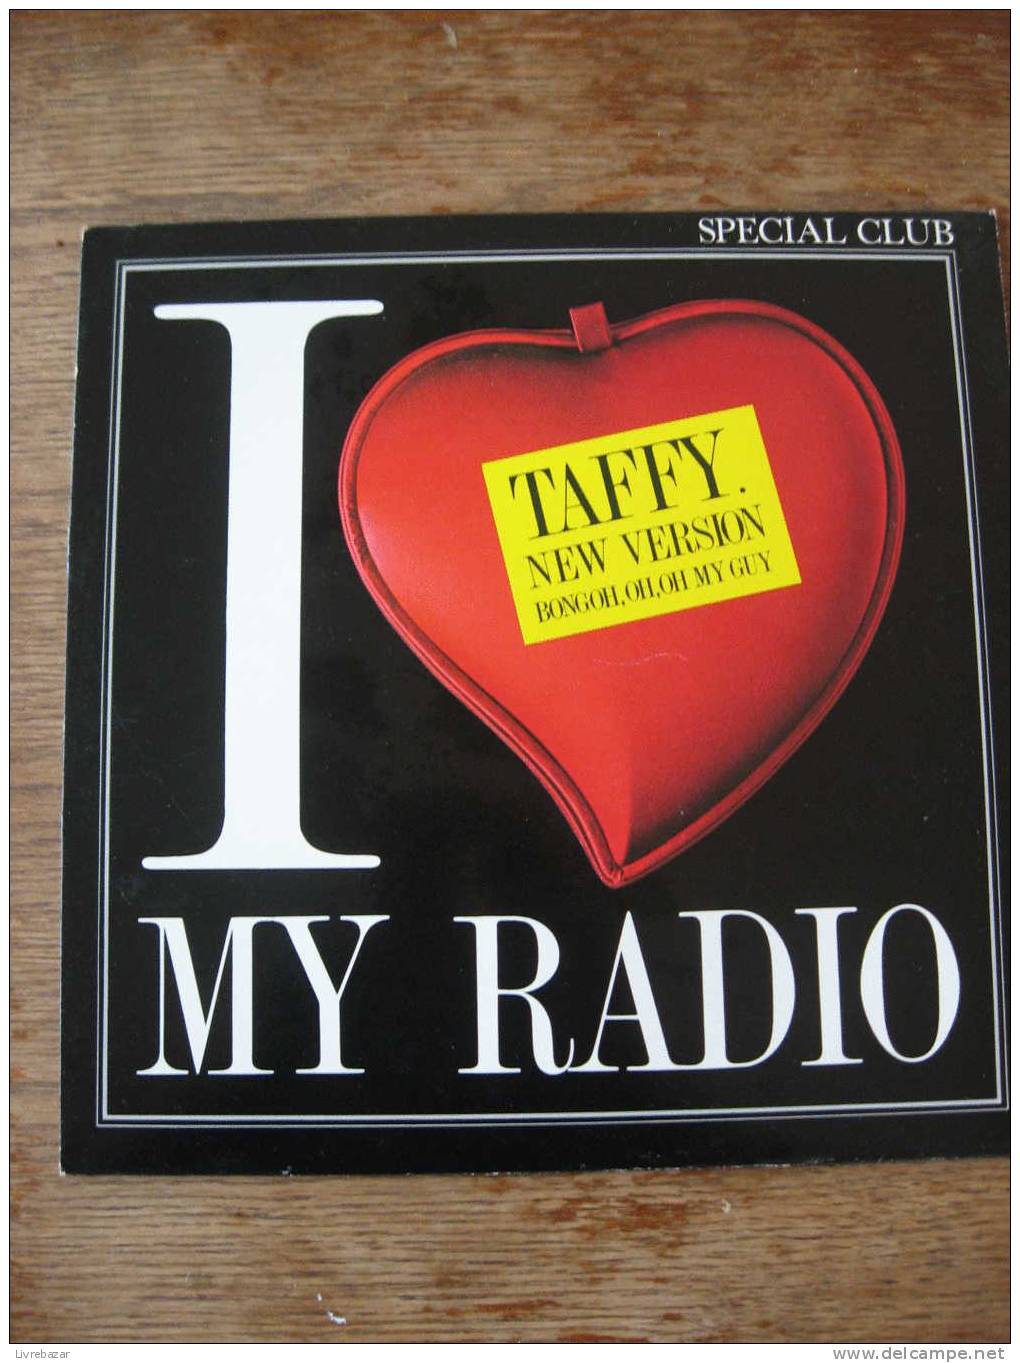 I LOVE MY RADIO TAFFY NEW VERSION SPECIAL CLUB - 45 T - Maxi-Single